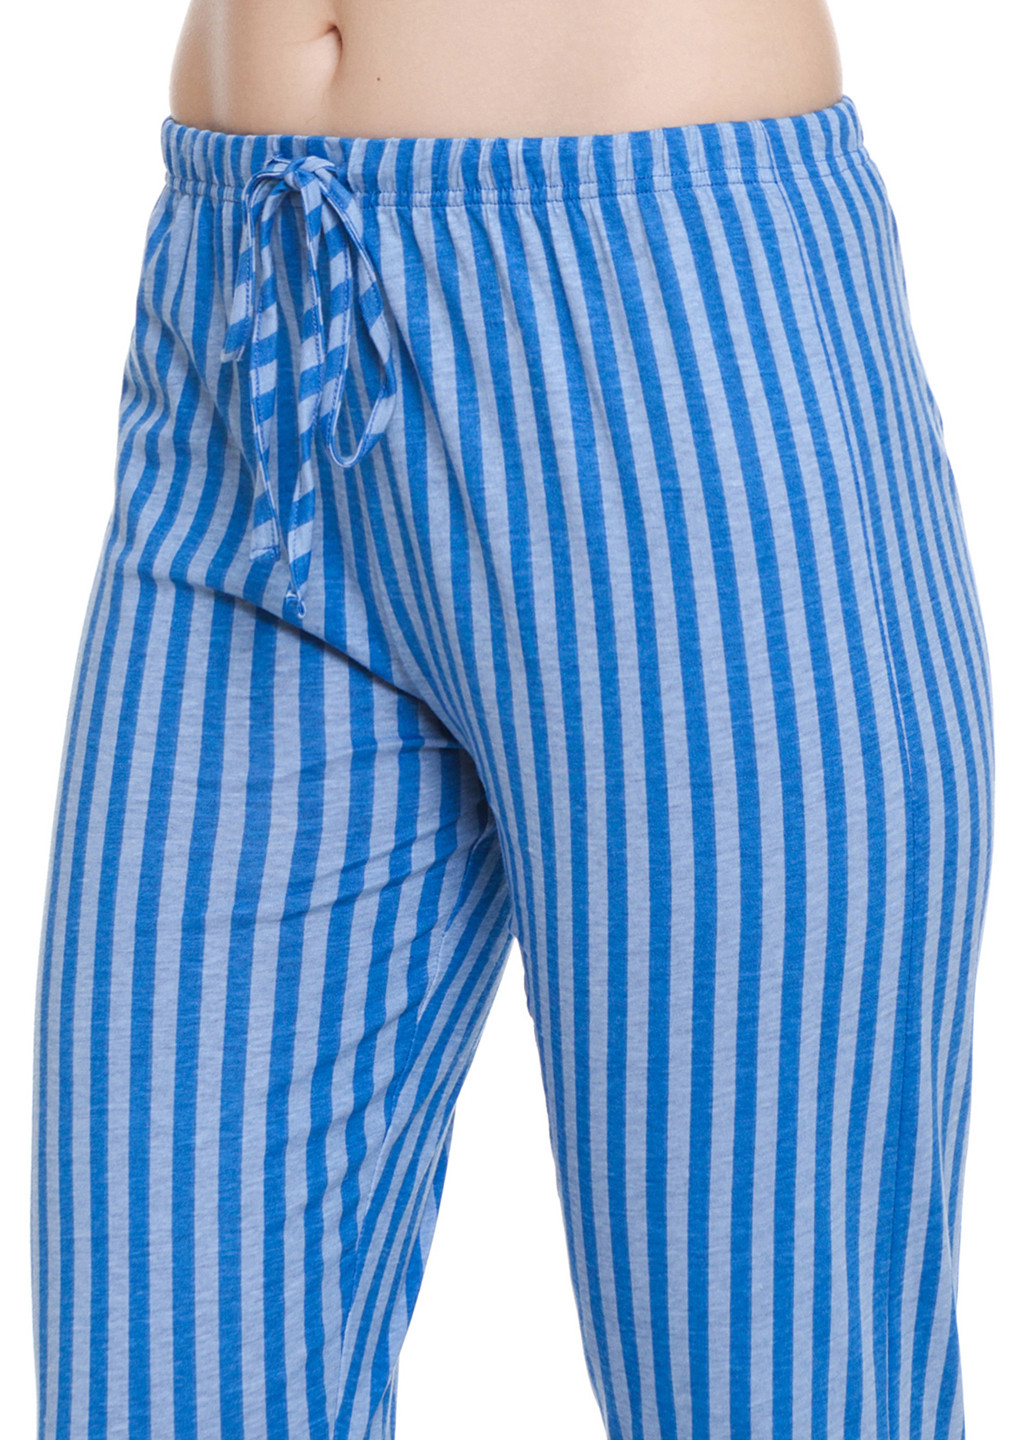 Синяя всесезон пижама (лонгслив, брюки) Lee Cooper